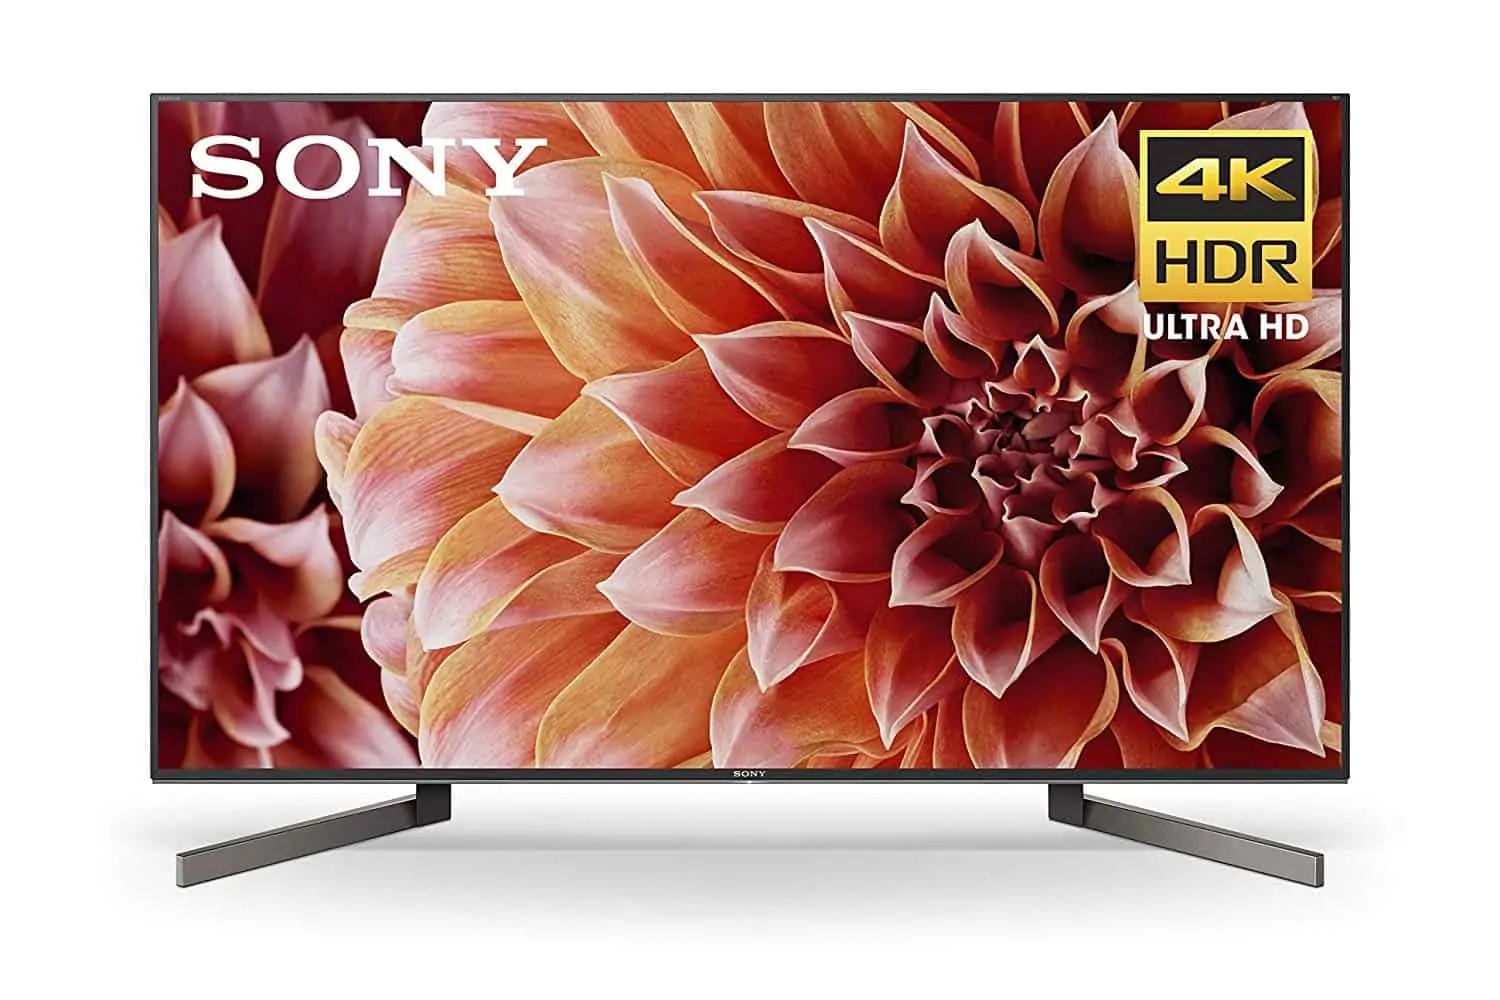 Sony XBR49X900F 49-Inch 4K Ultra HD Smart LED TV - Amazon